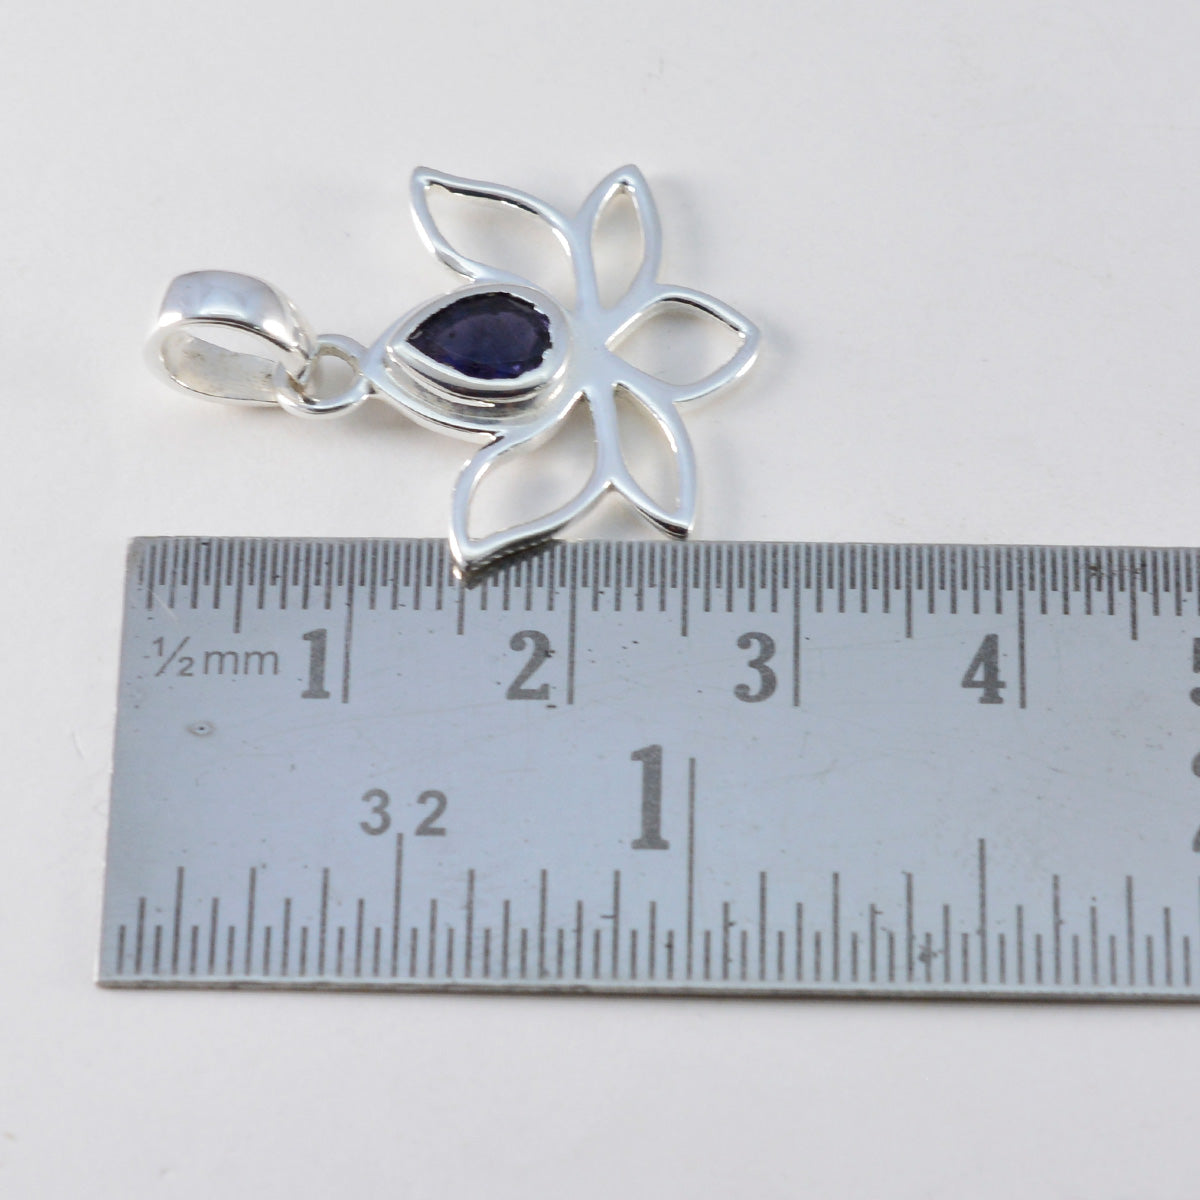 Riyo Graceful Gemstone Pear Faceted Blue Iolite Sterling Silver Pendant Gift For Women